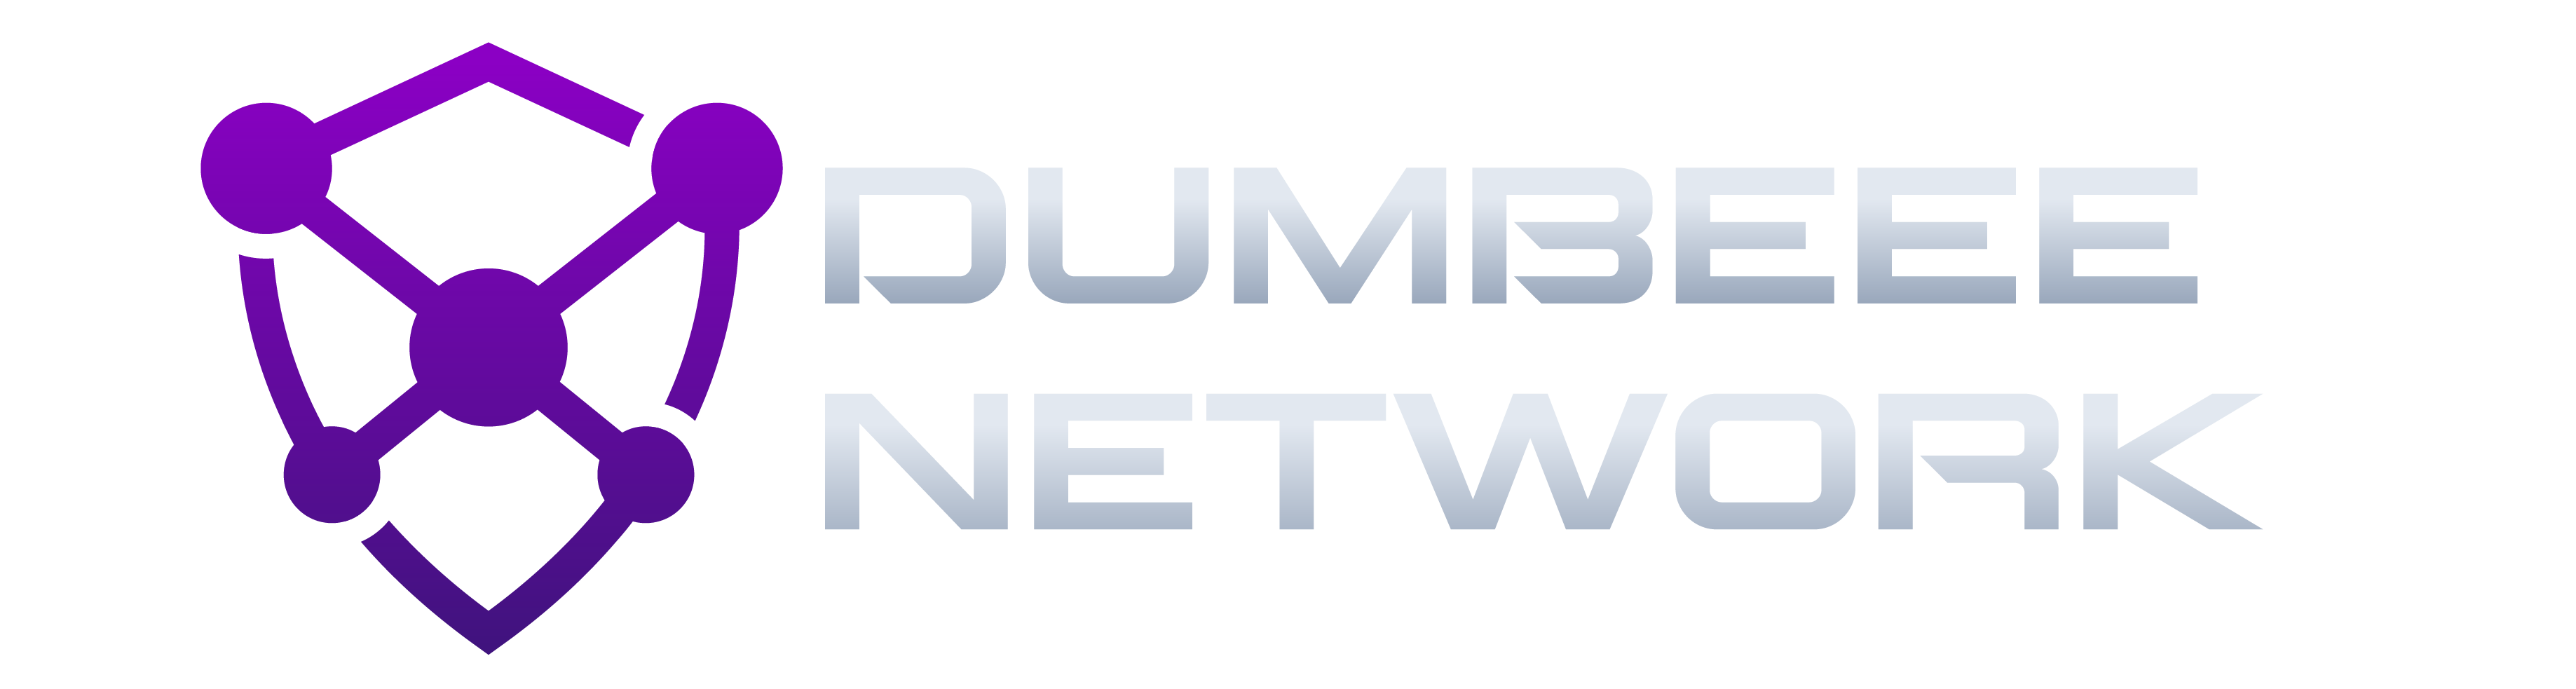 Dumbeee Network